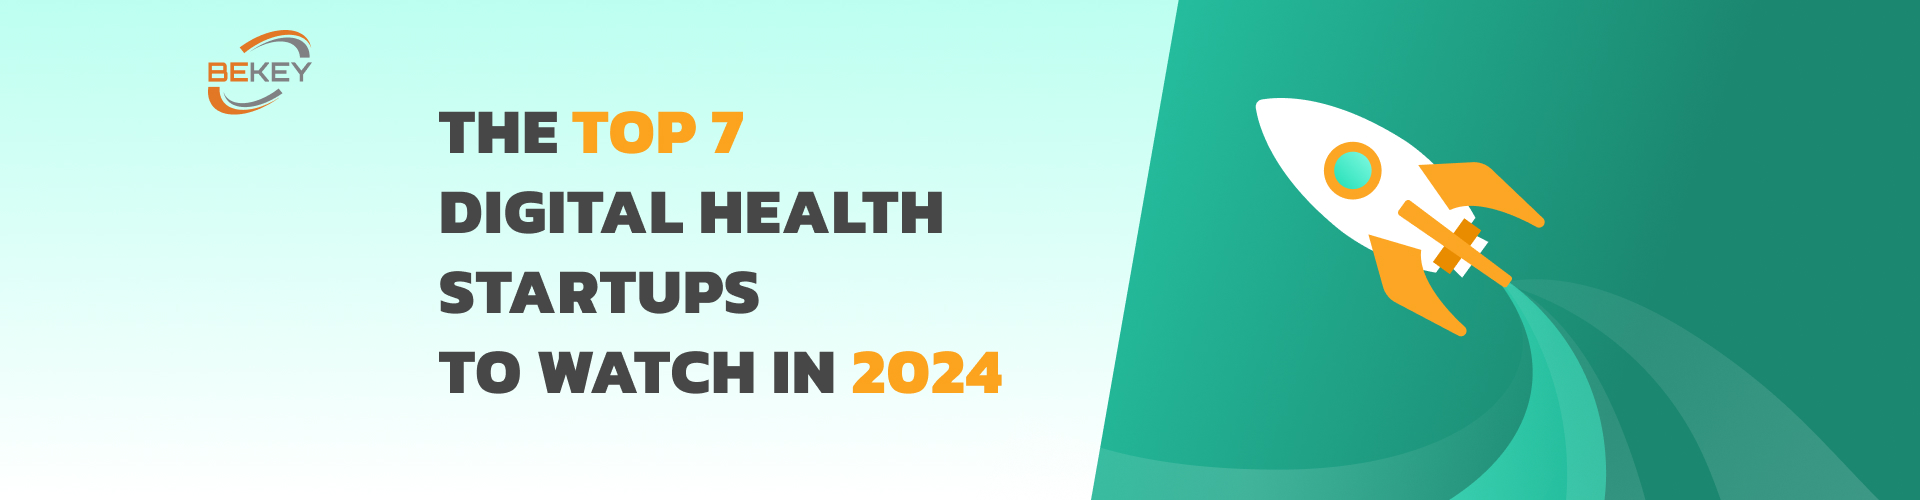 Top Seven Digital Health Startups to Watch in 2024 - image